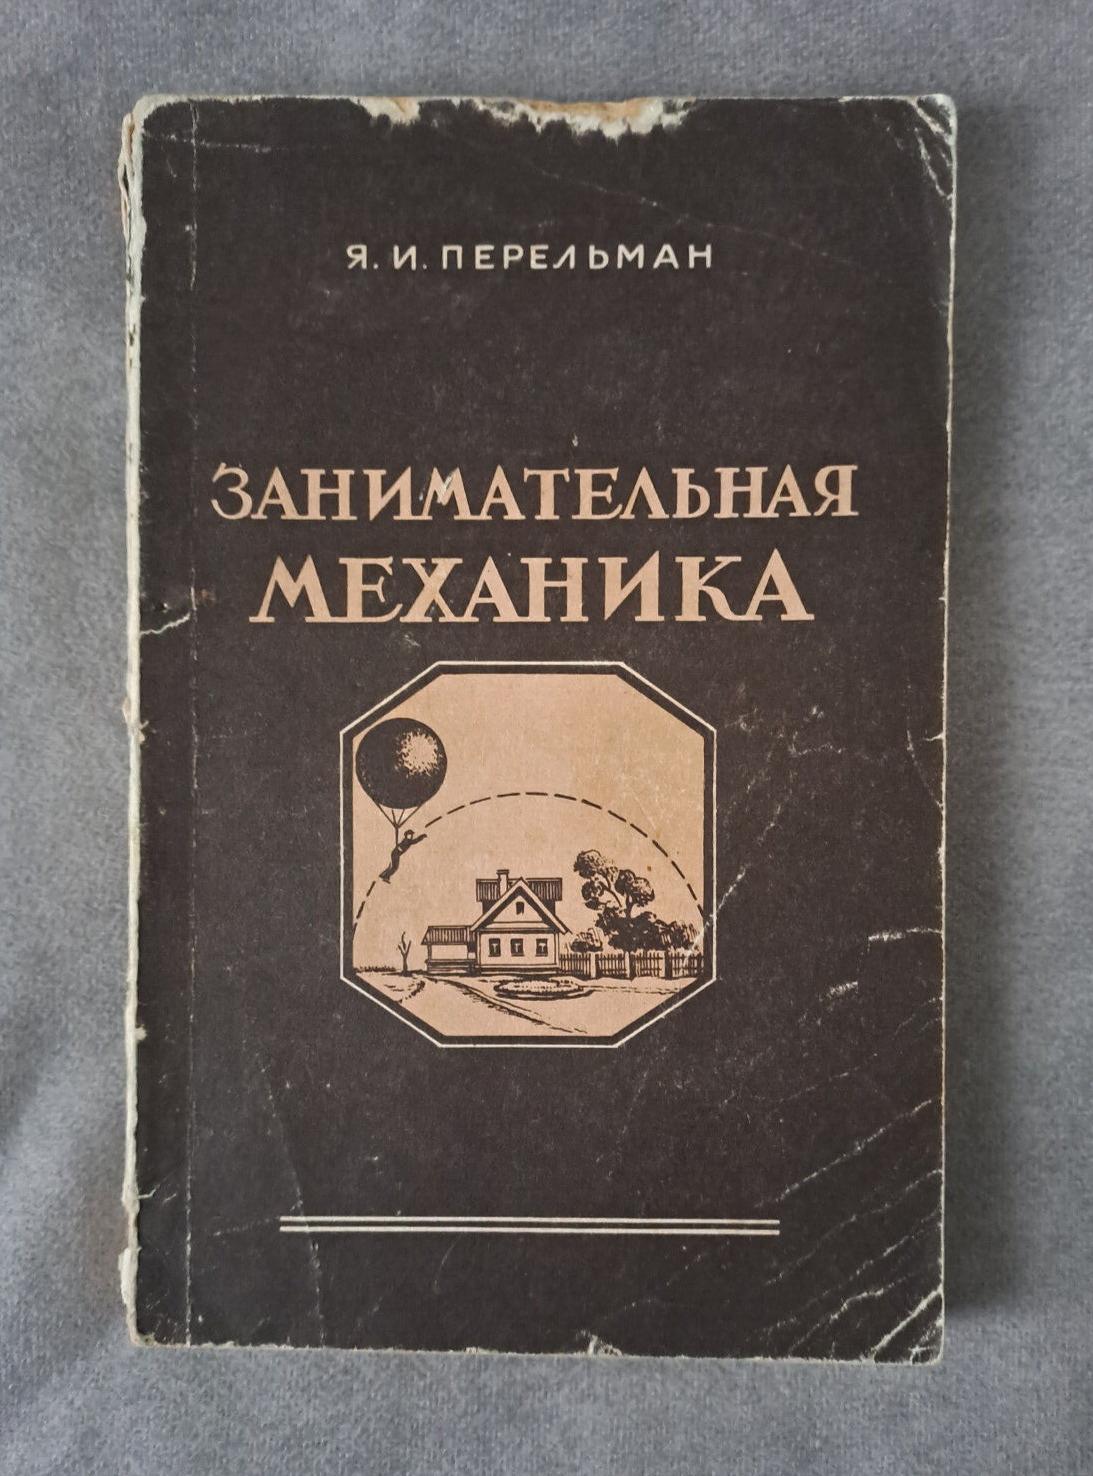 1951 Entertaining Mechanics Yakov Perelman Fhysics Russian Vintage book